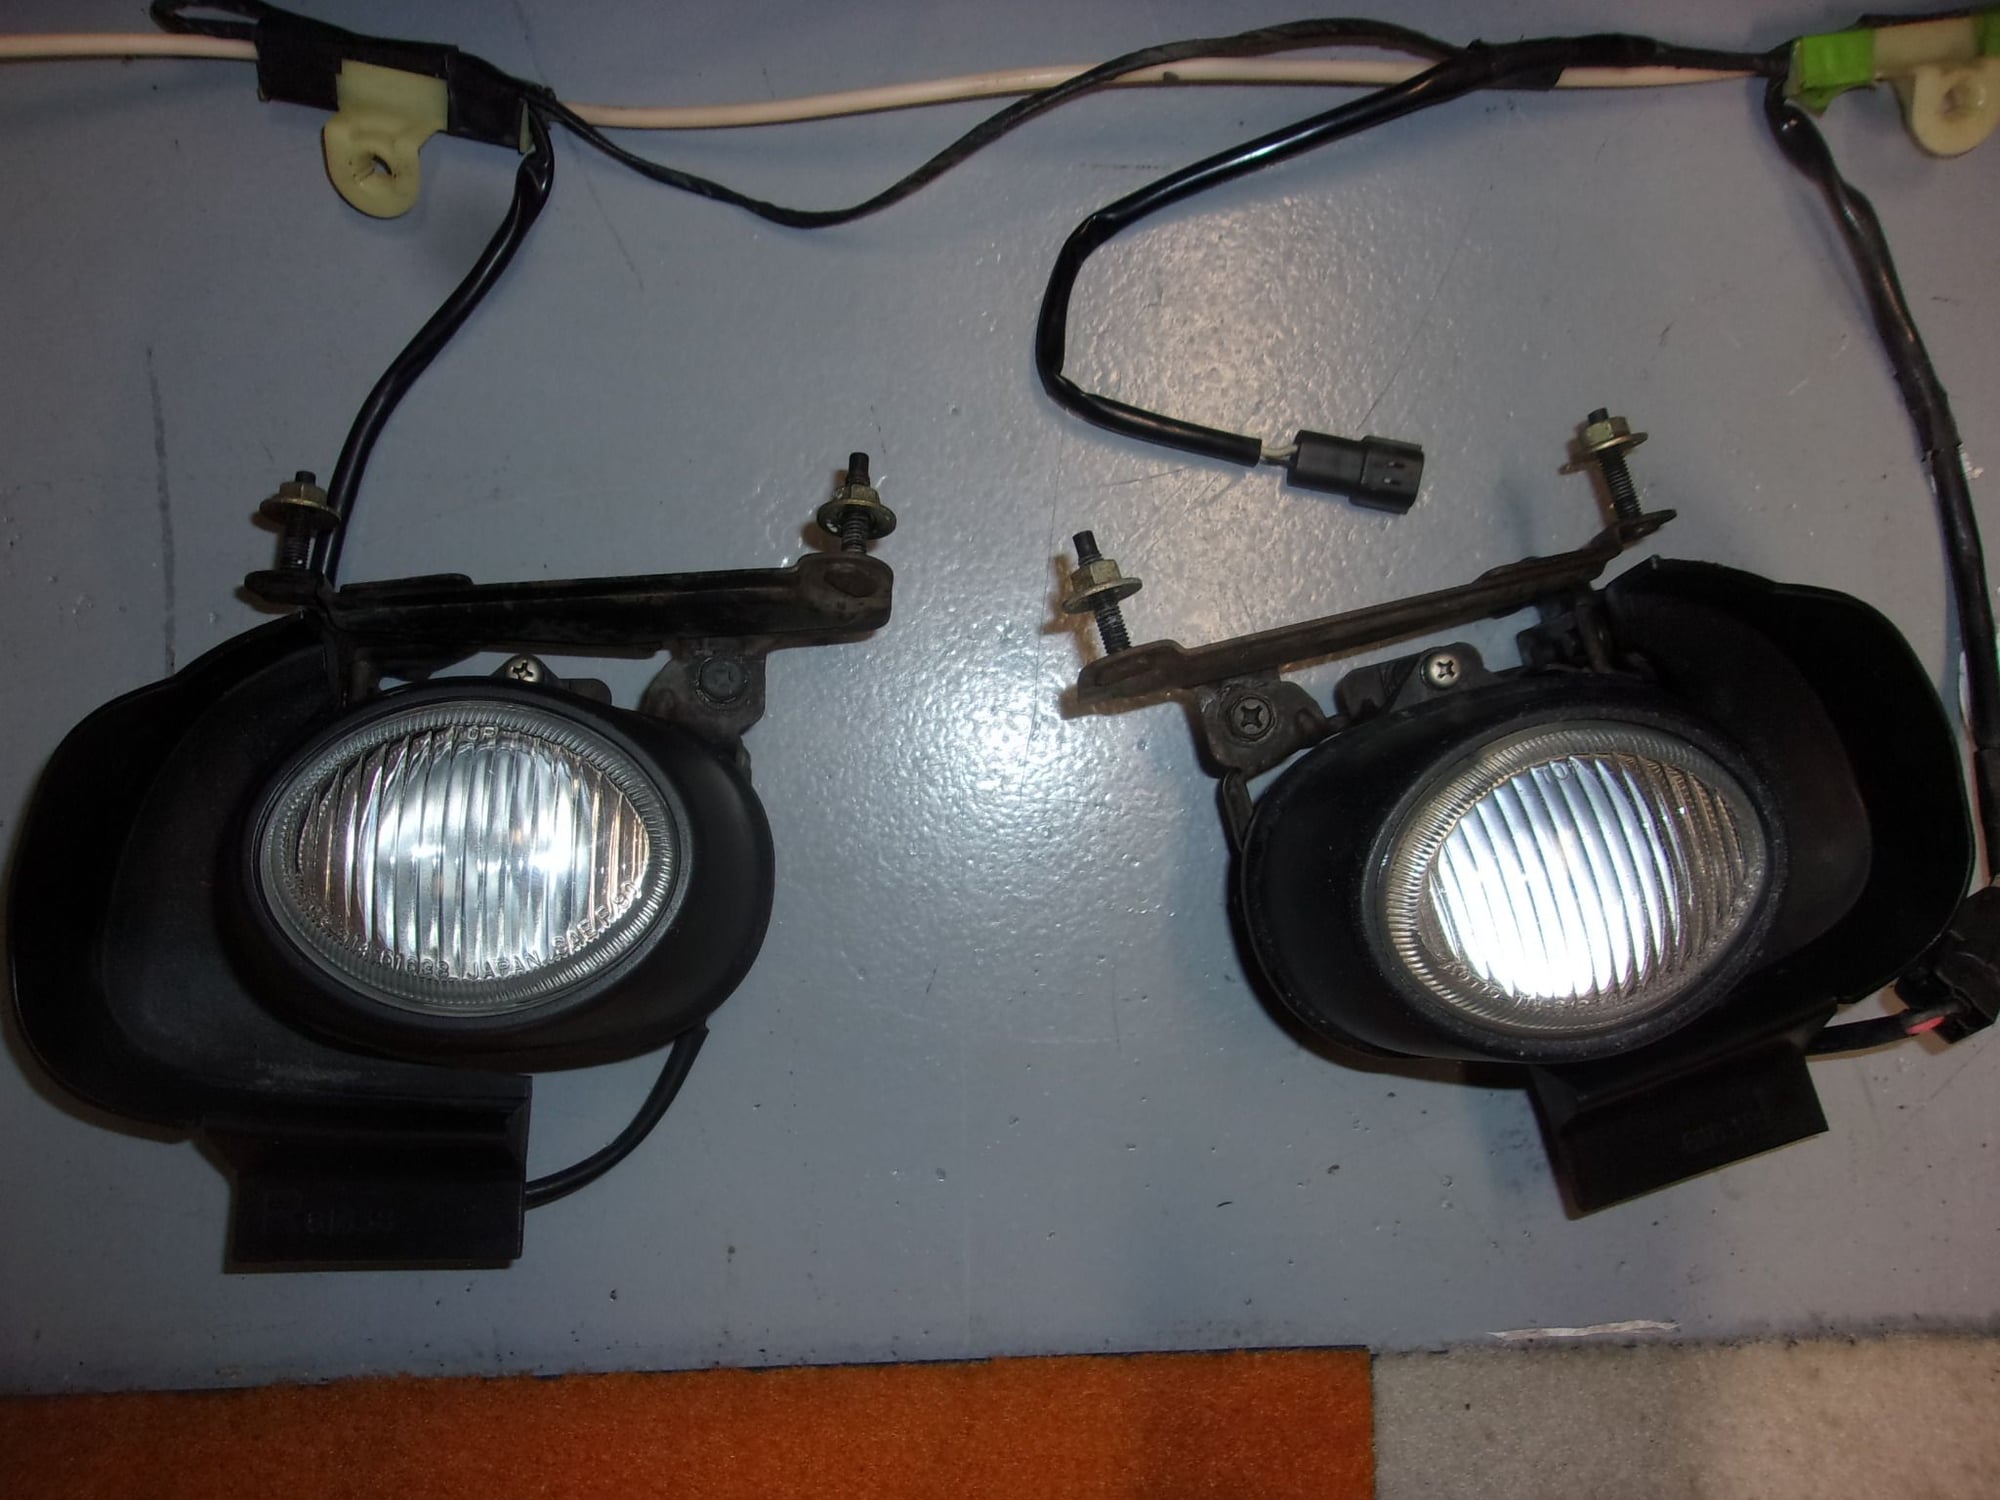 Exterior Body Parts - Front Rebar & Fog Lights - Used - 1993 to 1995 Mazda RX-7 - Murfreesboro, TN 37130, United States